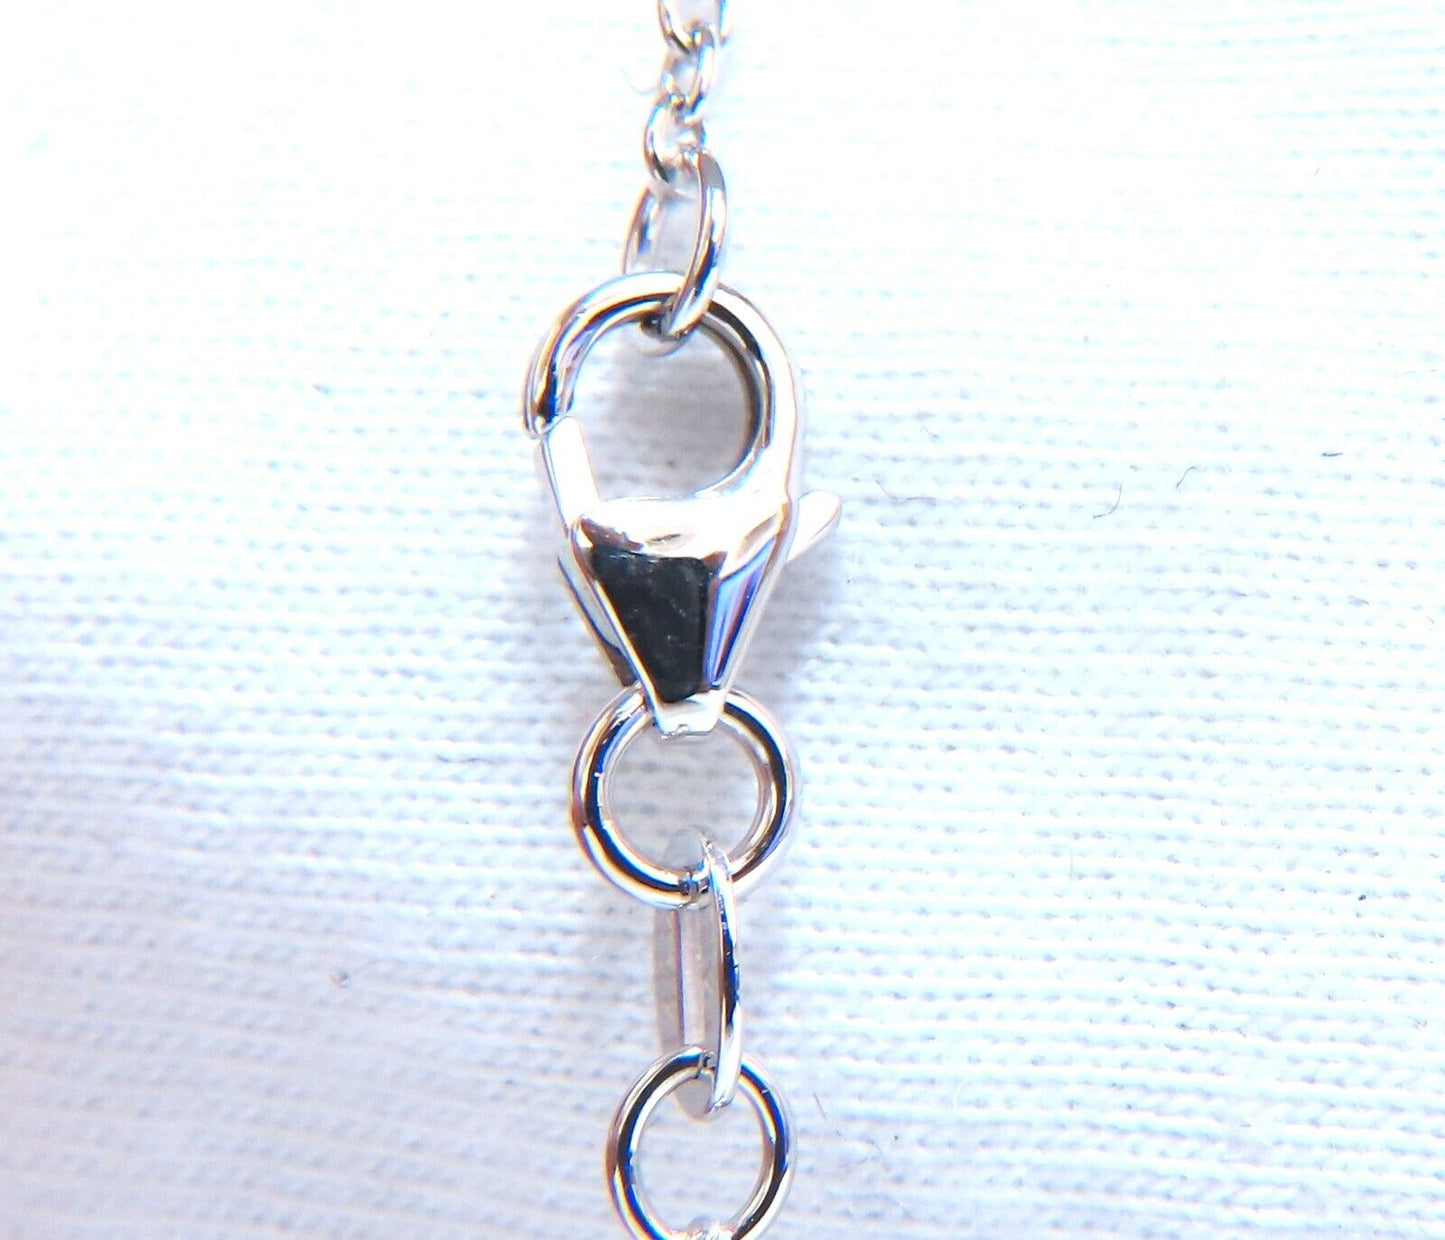 .72ct Bead Set Heart Natural diamonds cluster necklace 14 karat